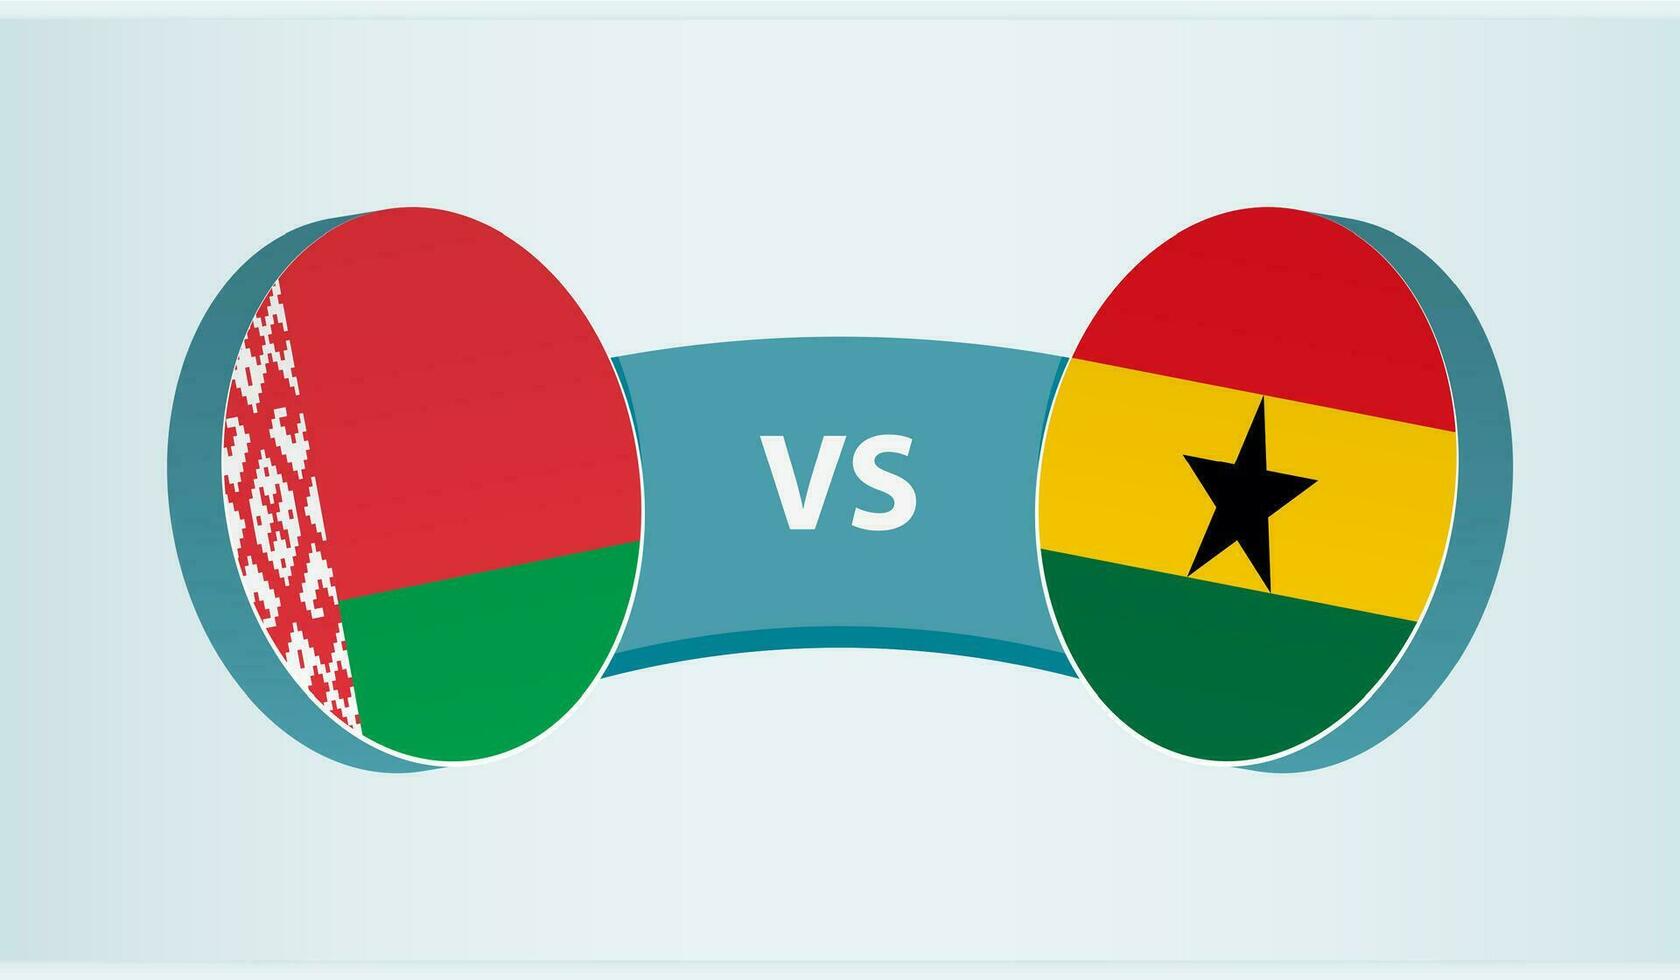 Belarus versus Ghana, team sports competition concept. vector